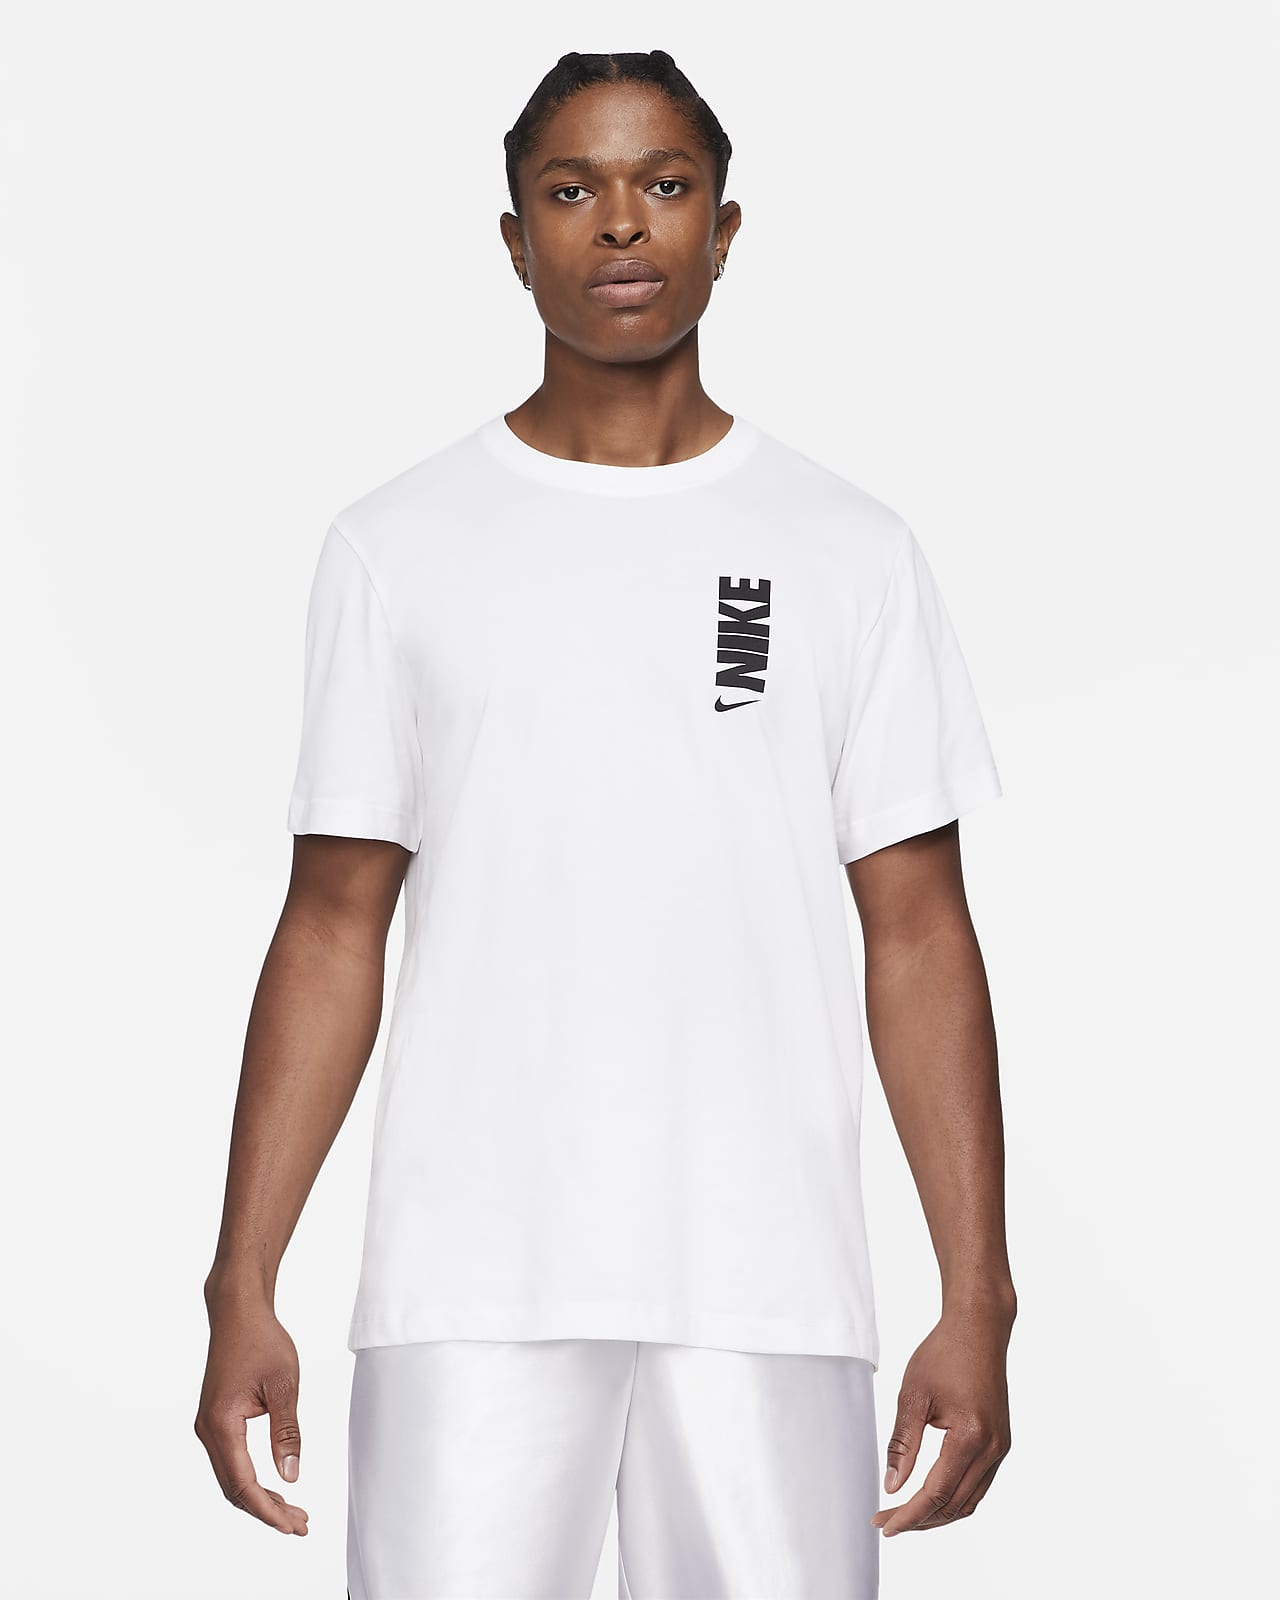 Nike Dri-FIT "Extra Bold" Men's Basketball T-Shirt